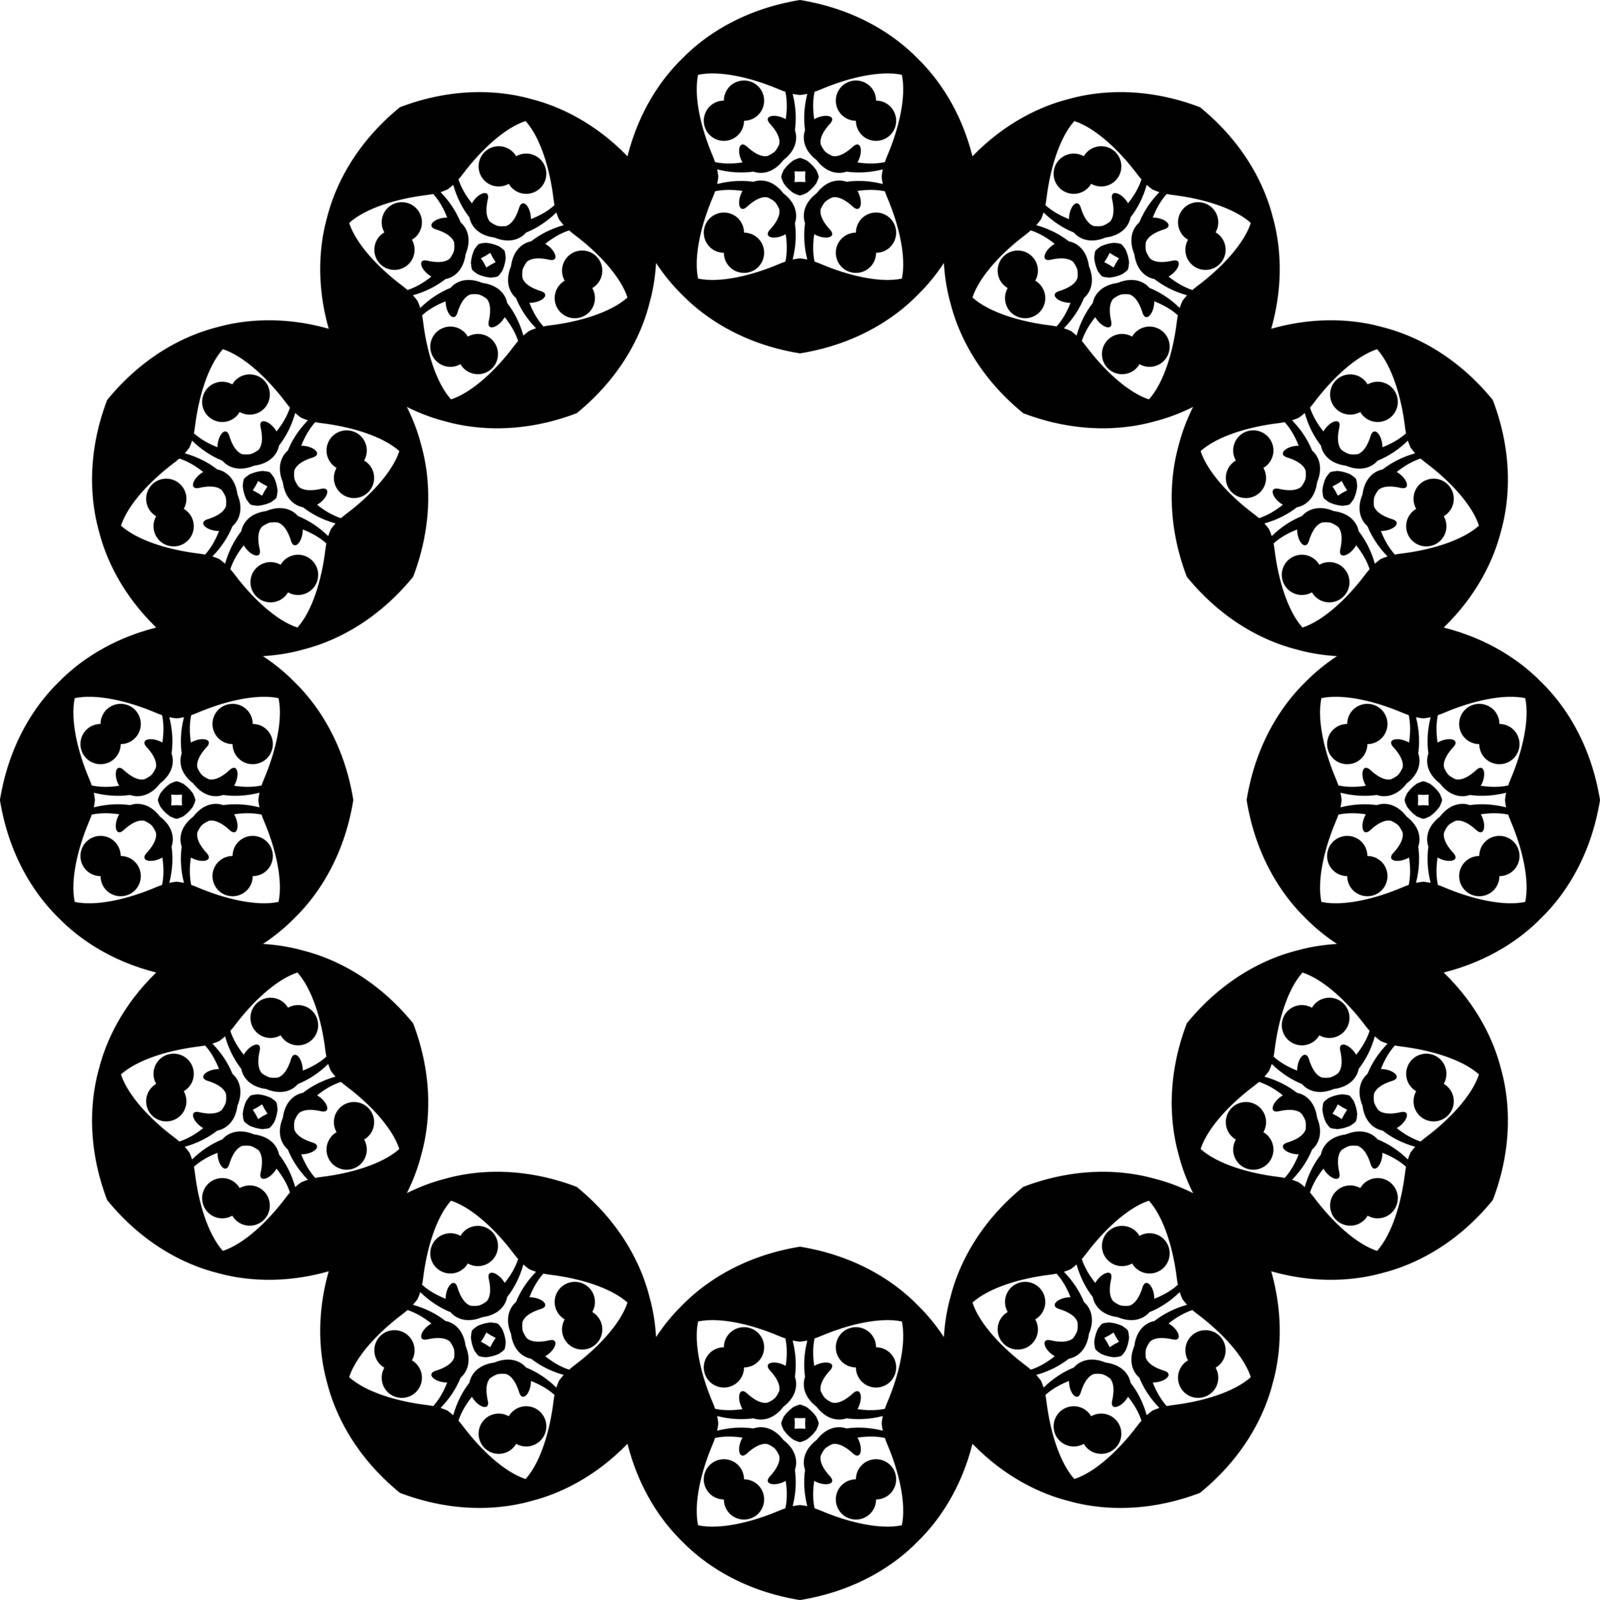 Decorative illustrated circle frame made of black elements